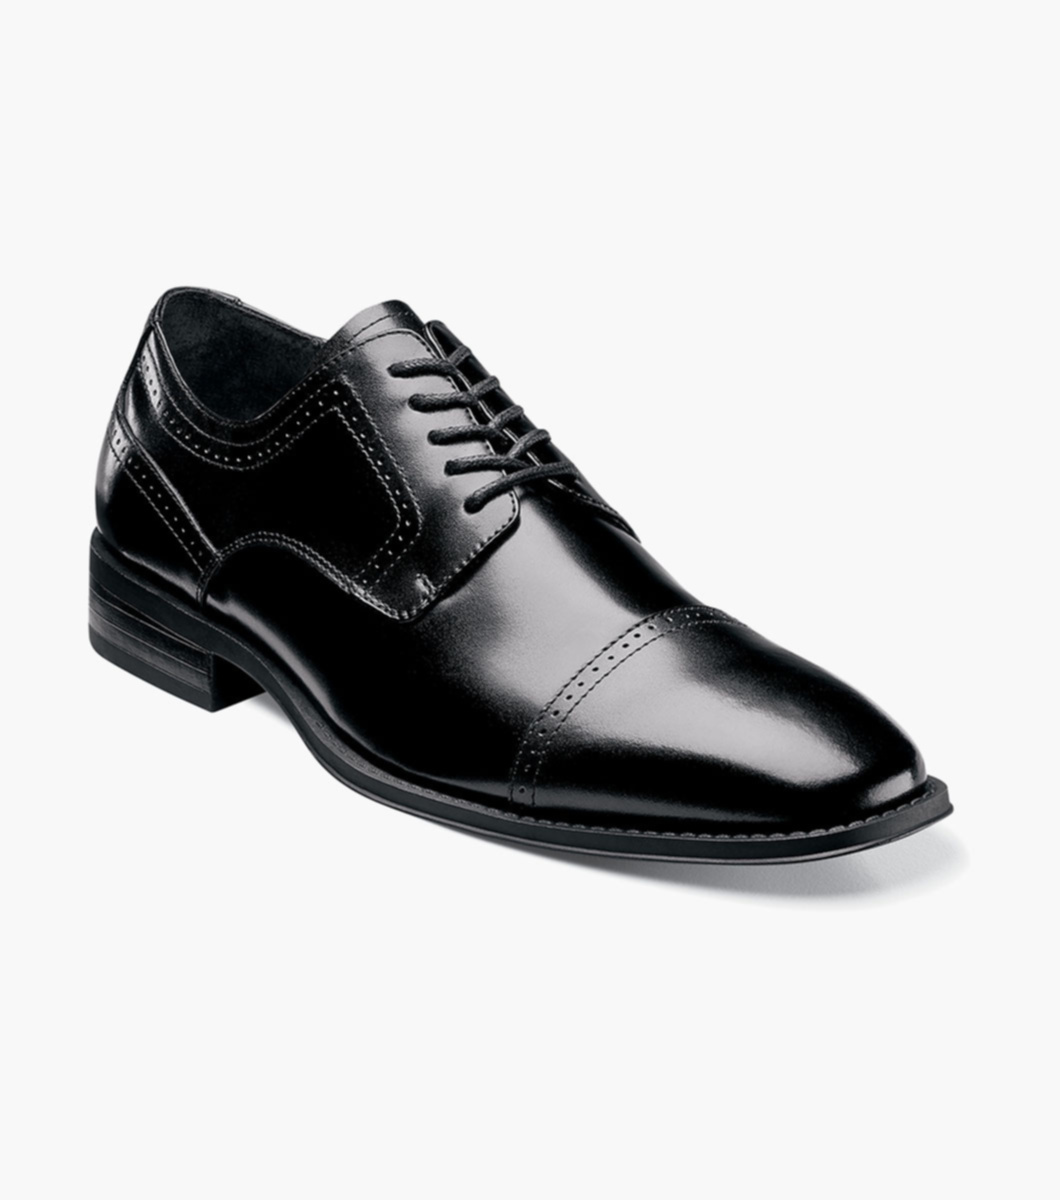 Stacy Adams Square Toe Dress Shoes Black Leather Men's Size 11 M